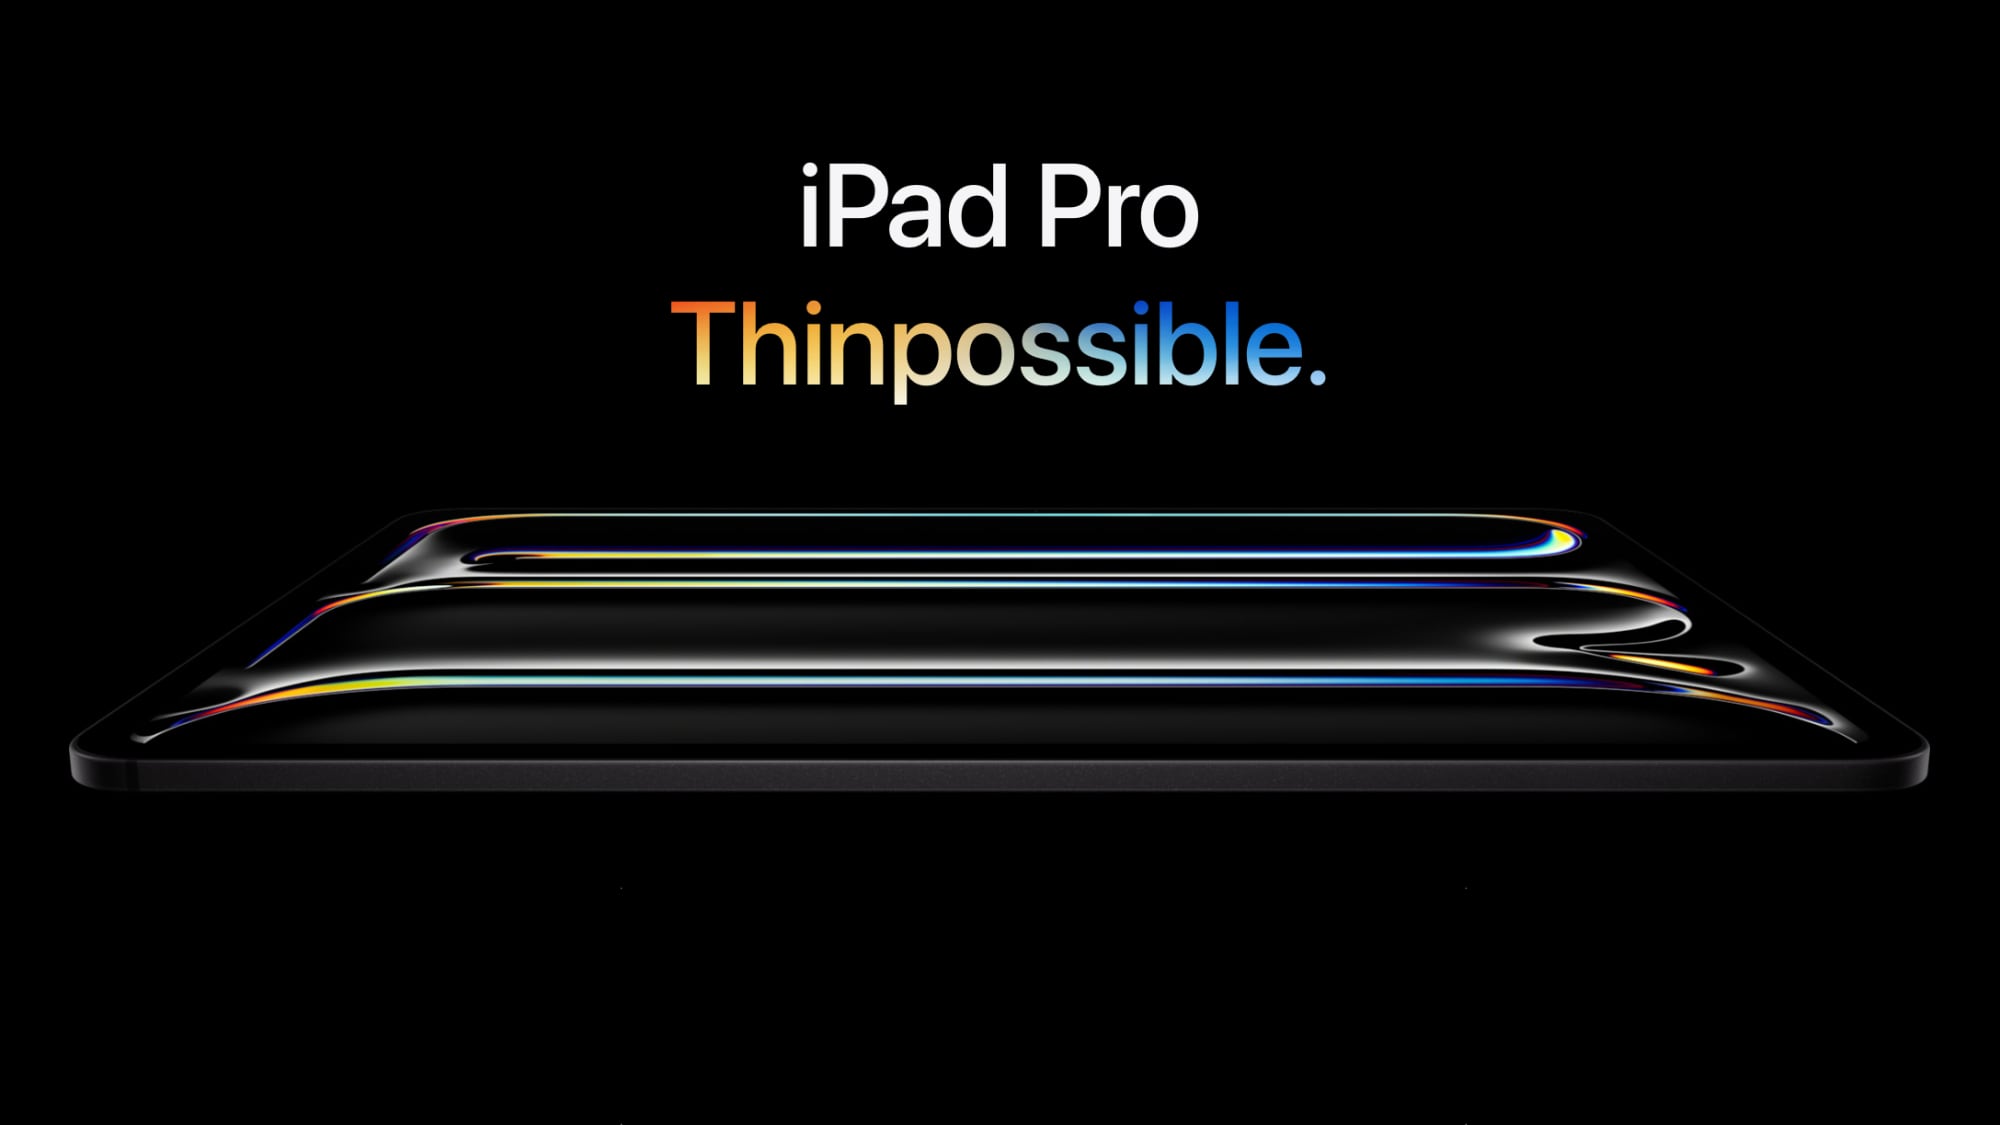 Apple’s New iPad Pro Models Weigh Less Than iPad Air Models